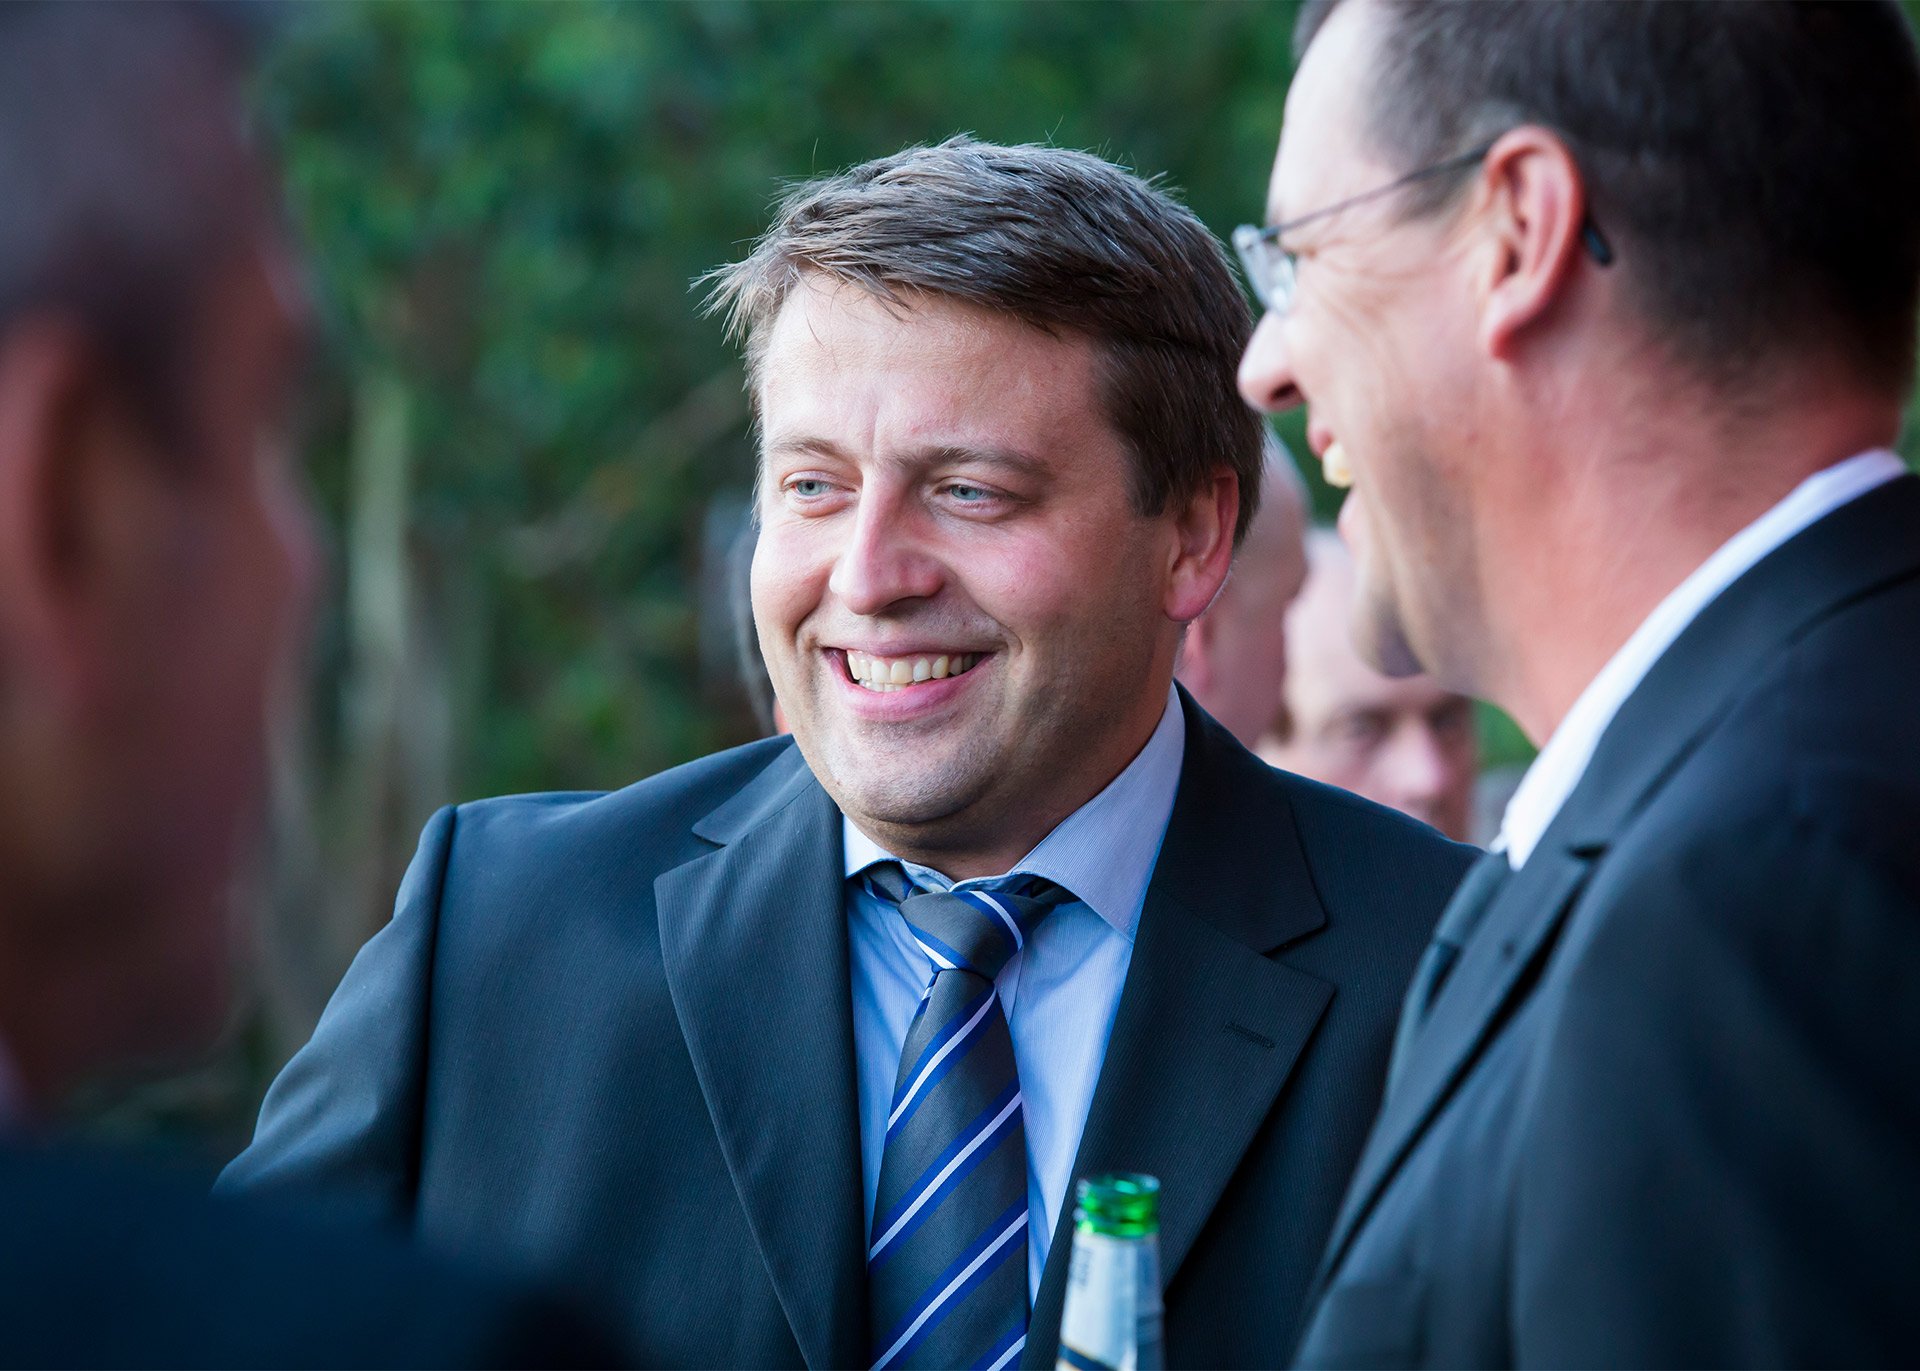  three men in suits networking smiling drinks brisbane kirsten cox photographer event 